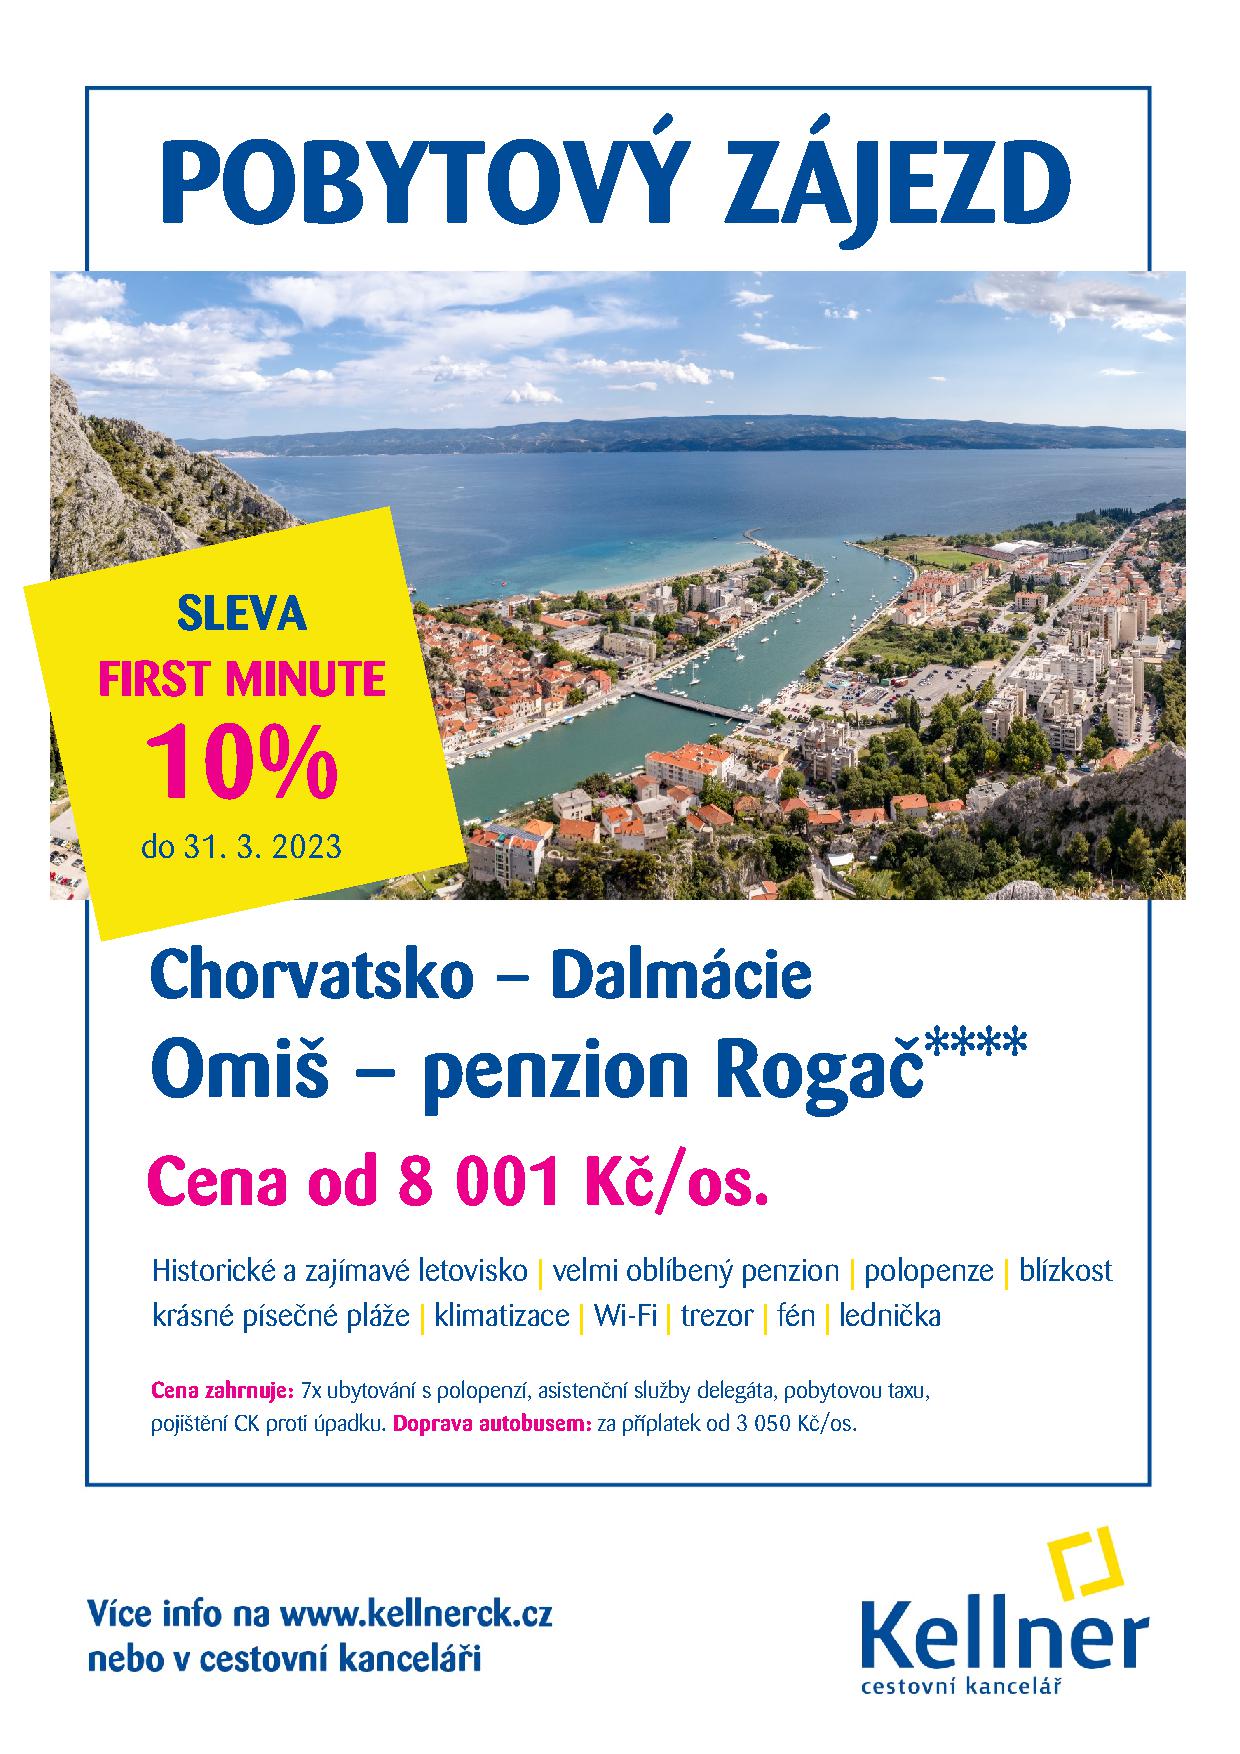 2. Chorvatsko - Omiš - penzion Rogač